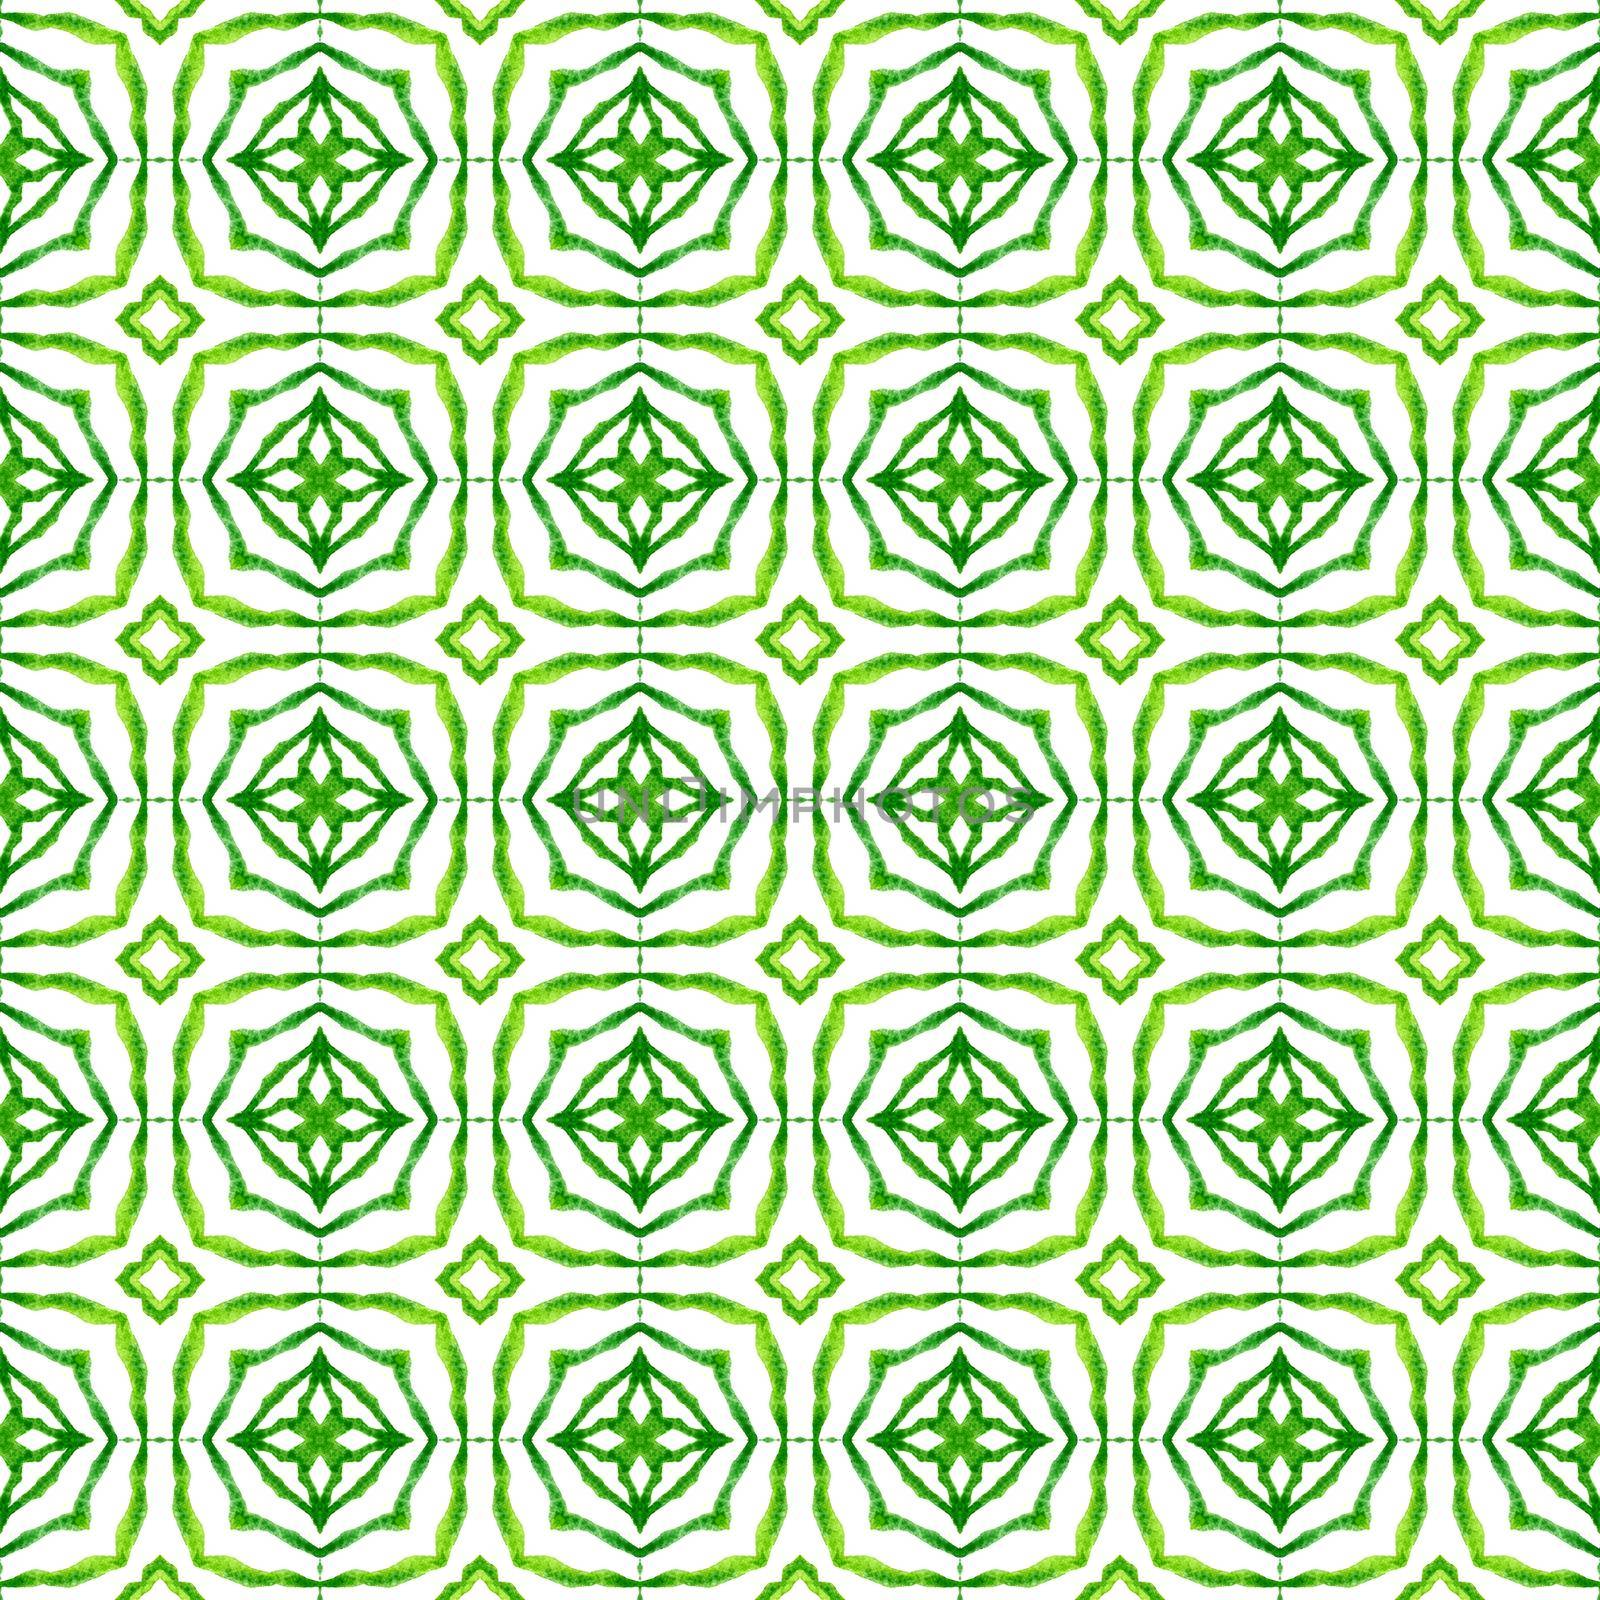 Chevron watercolor pattern. Green extraordinary boho chic summer design. Textile ready lively print, swimwear fabric, wallpaper, wrapping. Green geometric chevron watercolor border.